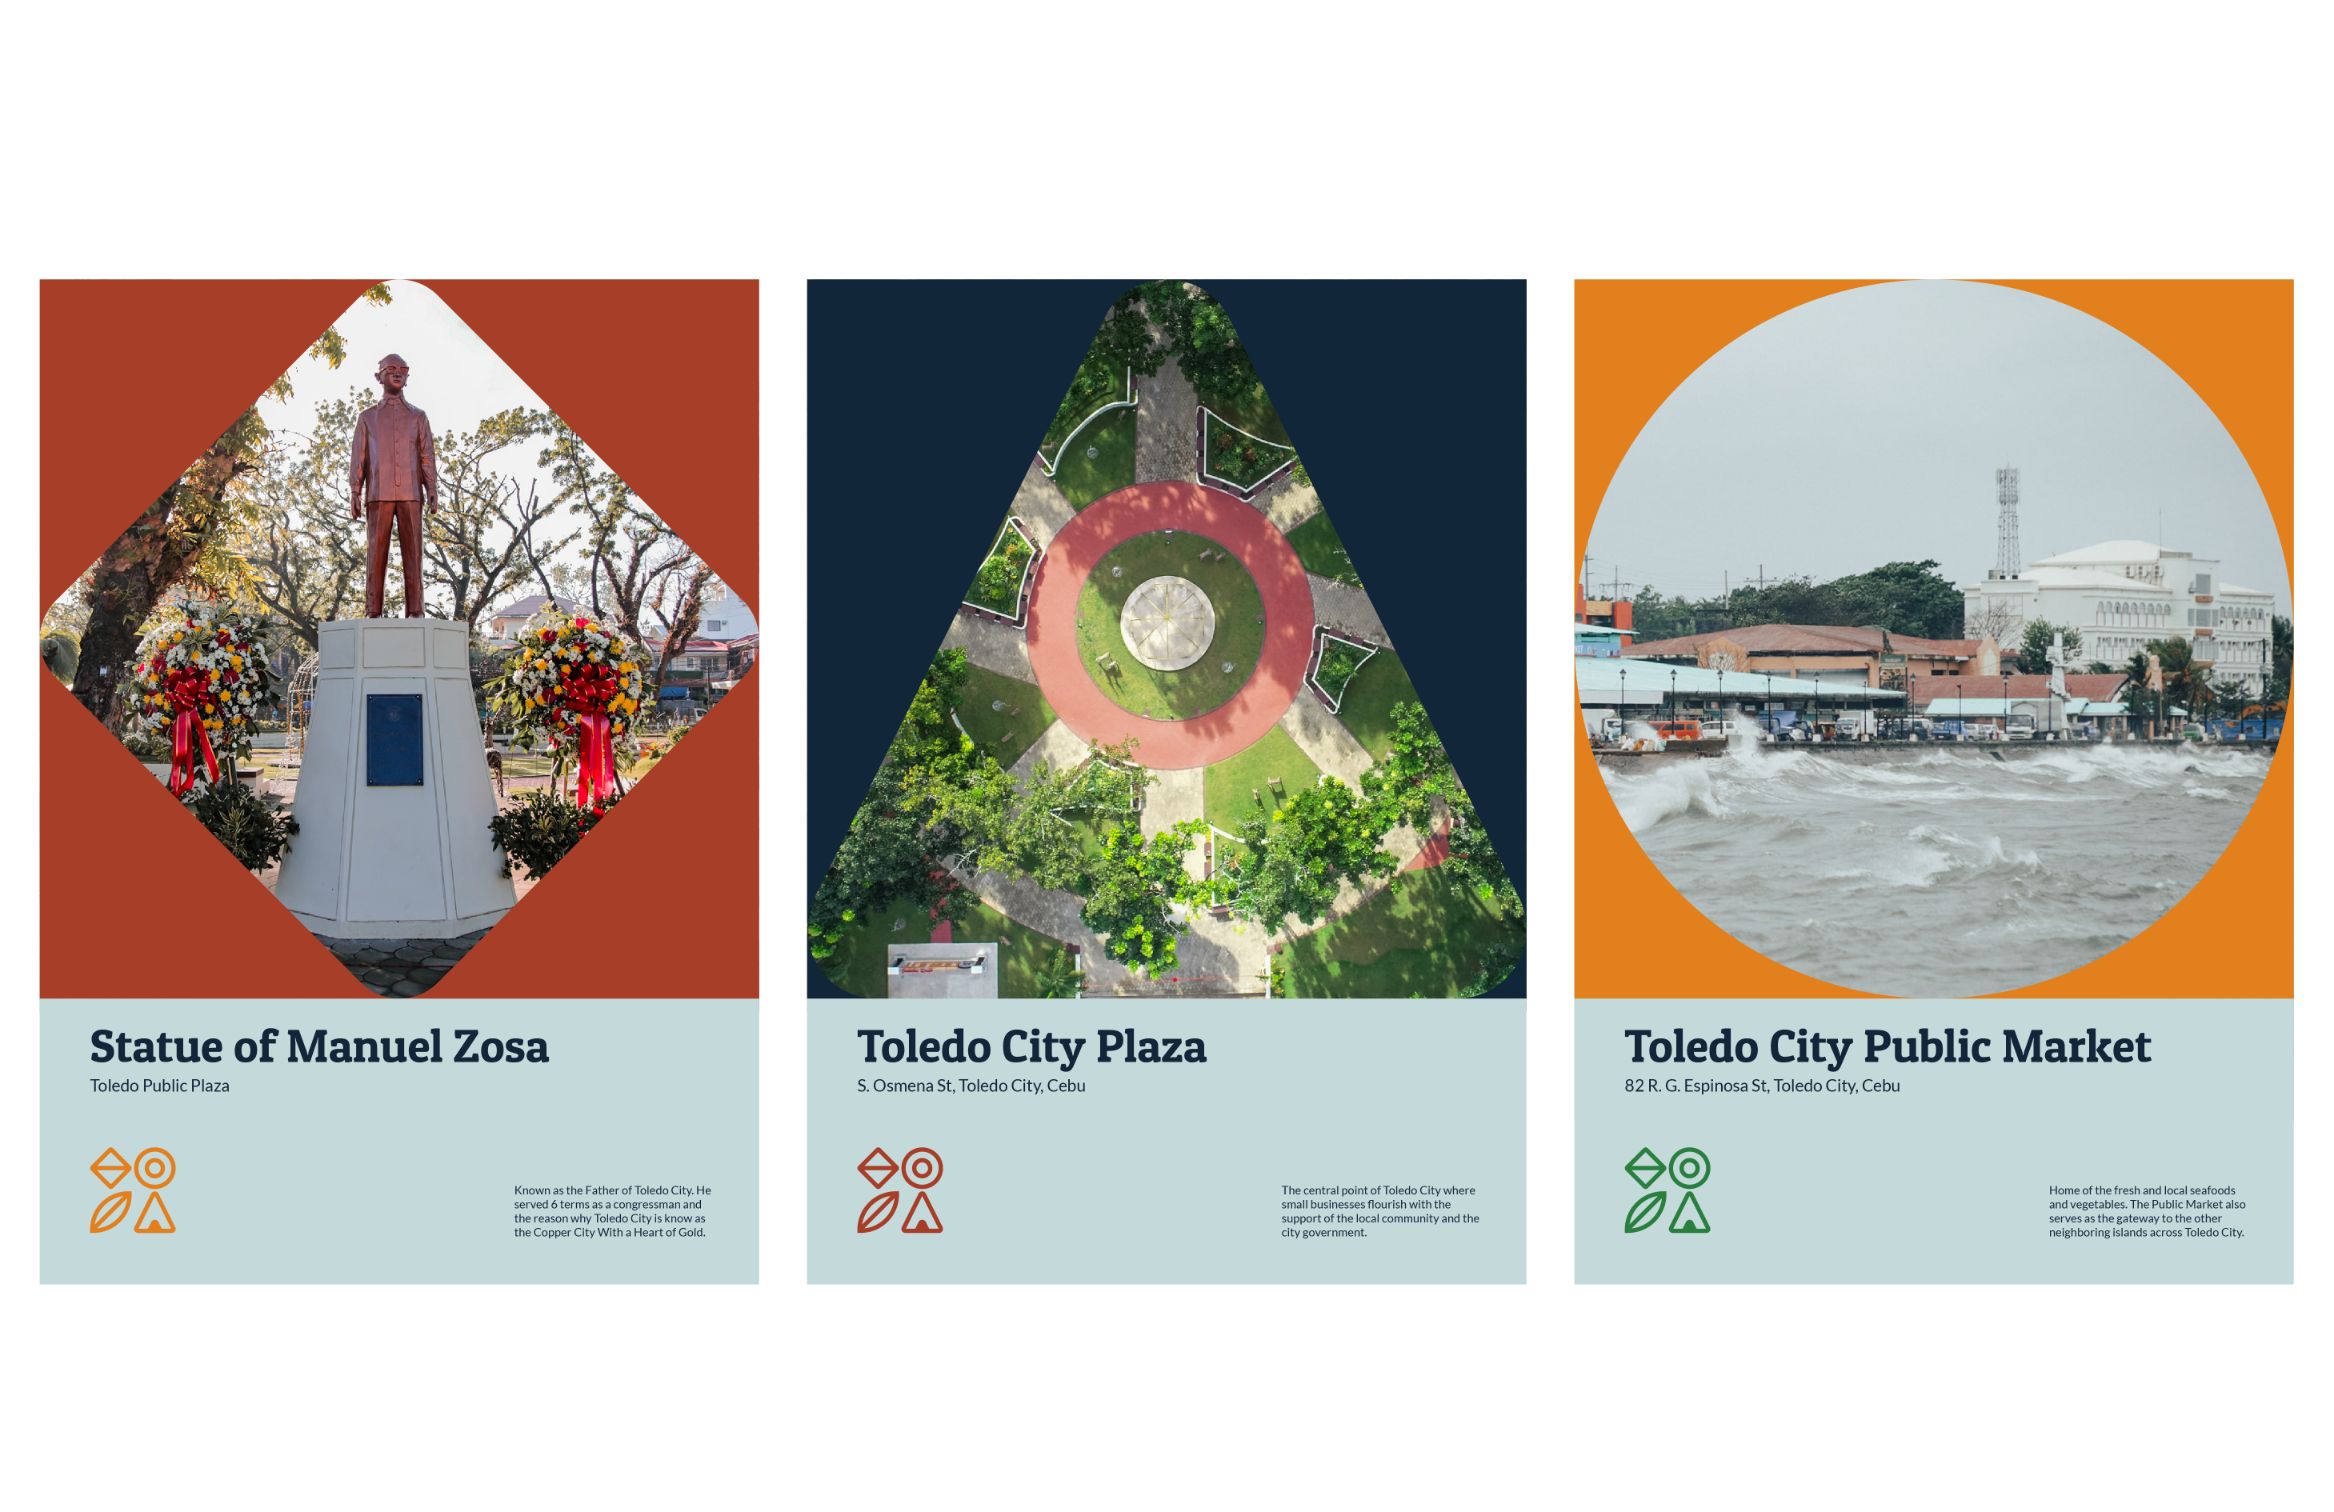 Poster design highlighting Toledo Cebu's tourist spot